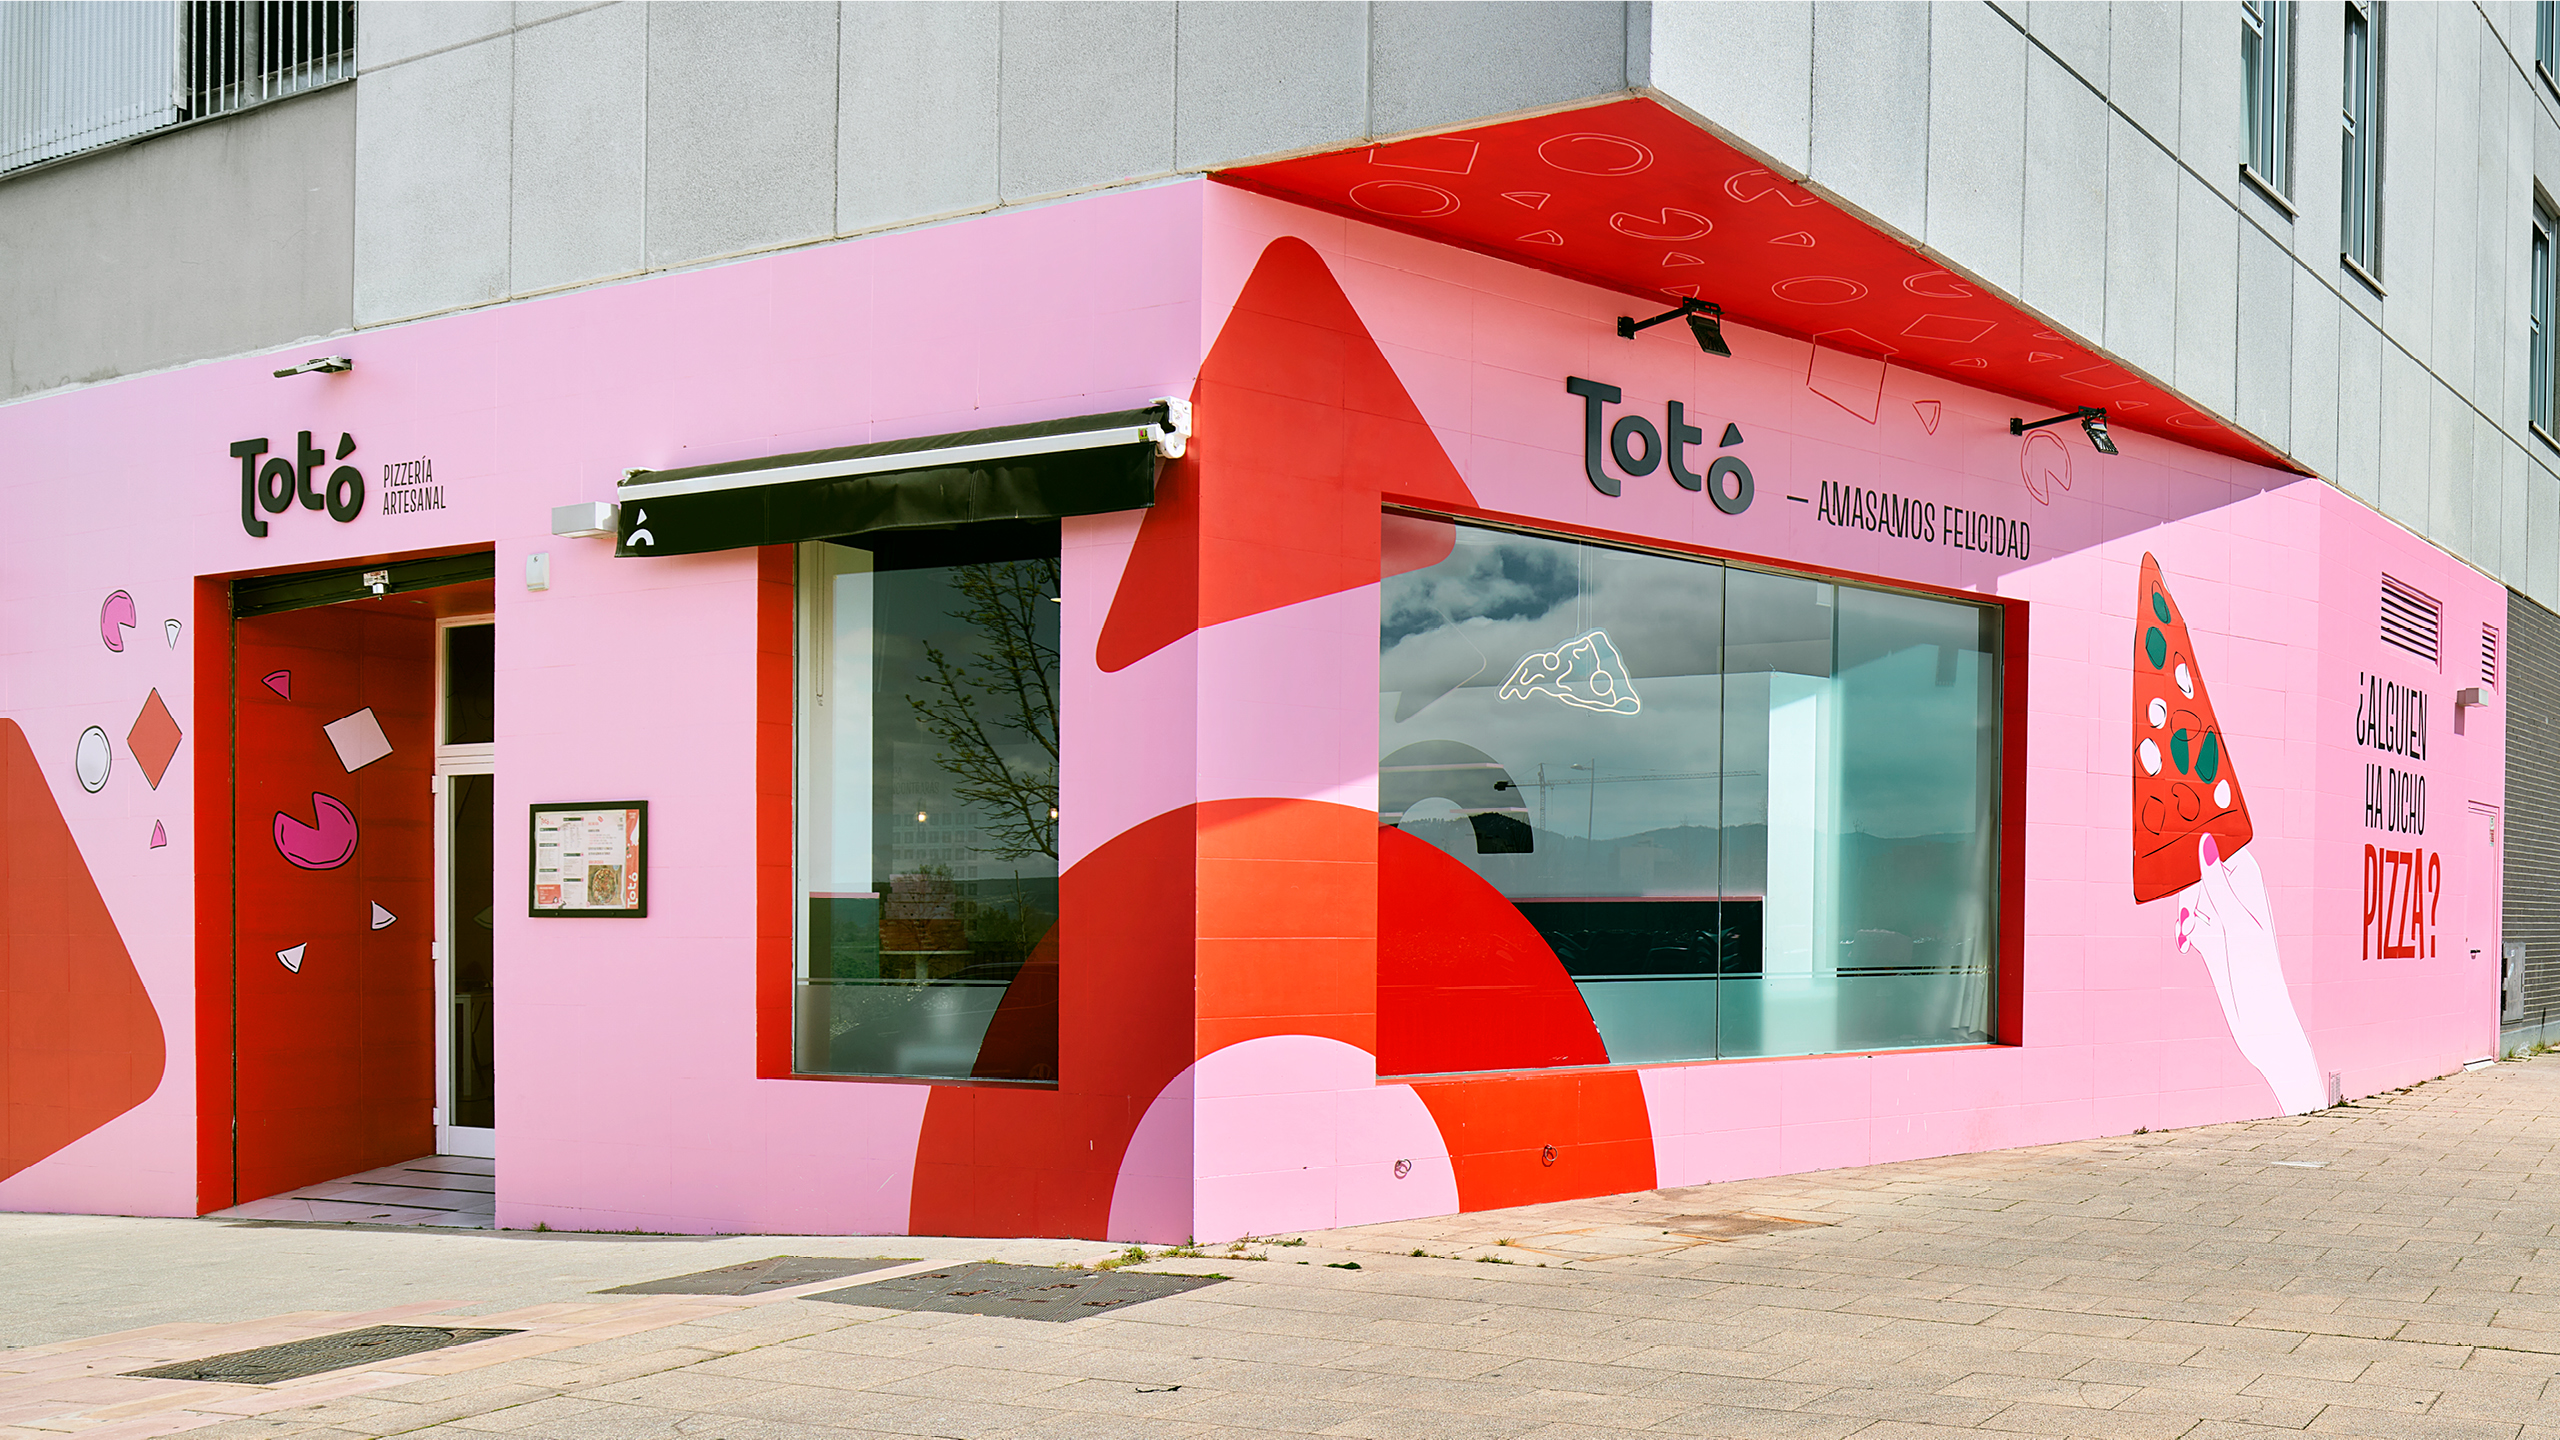 Totó by Avocado - Creative Work